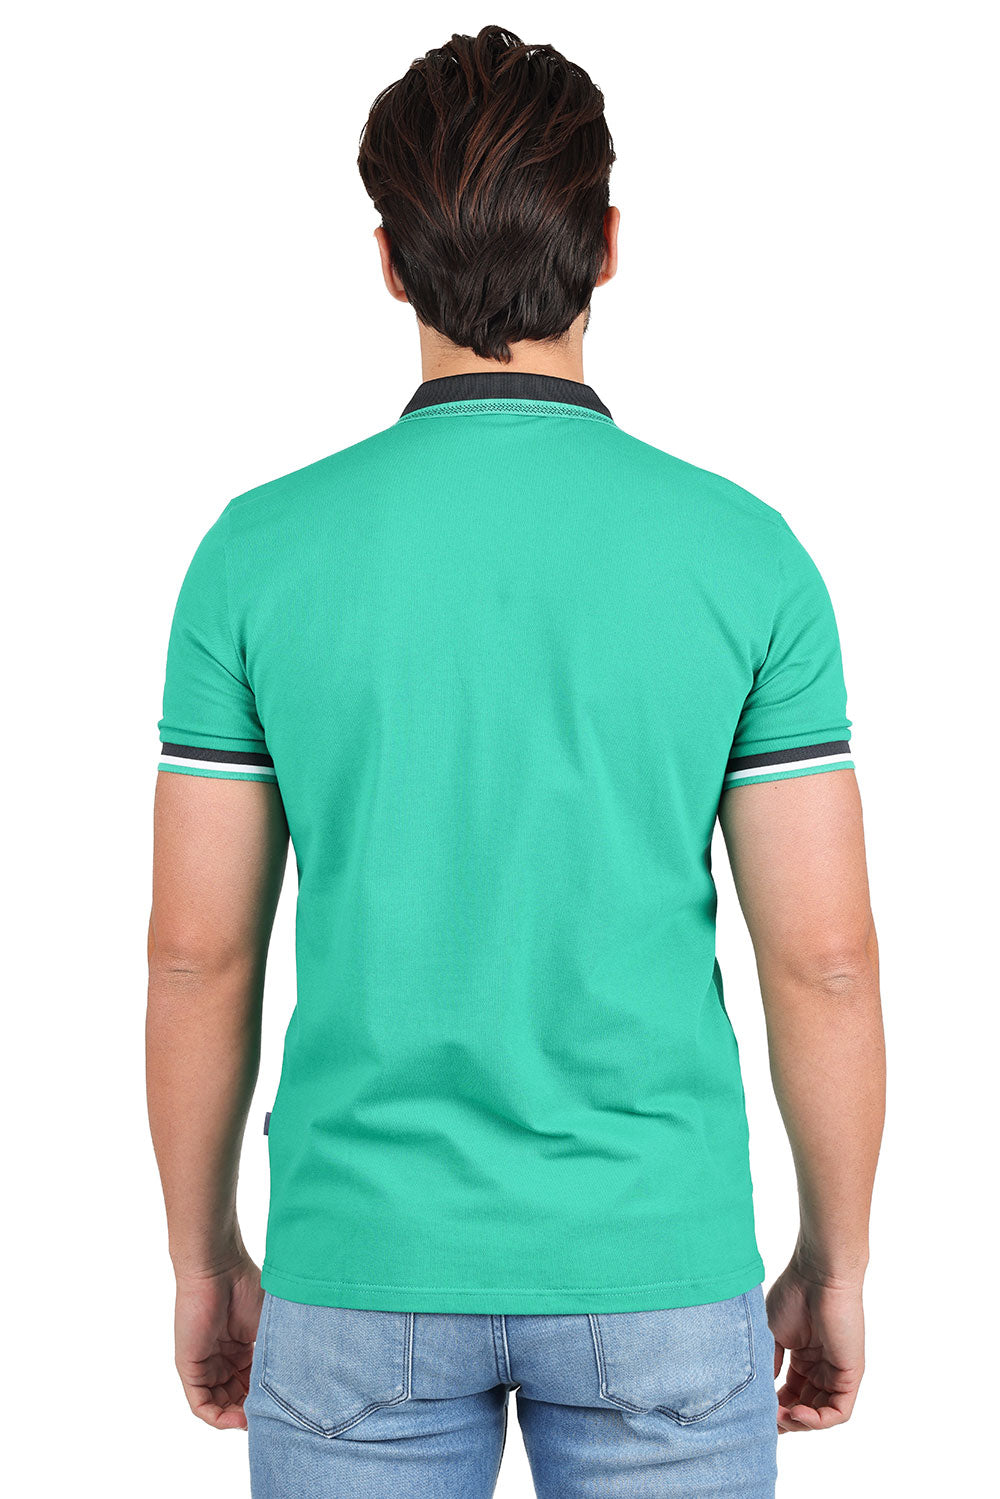 BARABAS Men's Premium Solid Color Short Sleeve Polo shirts 3PP839 Green